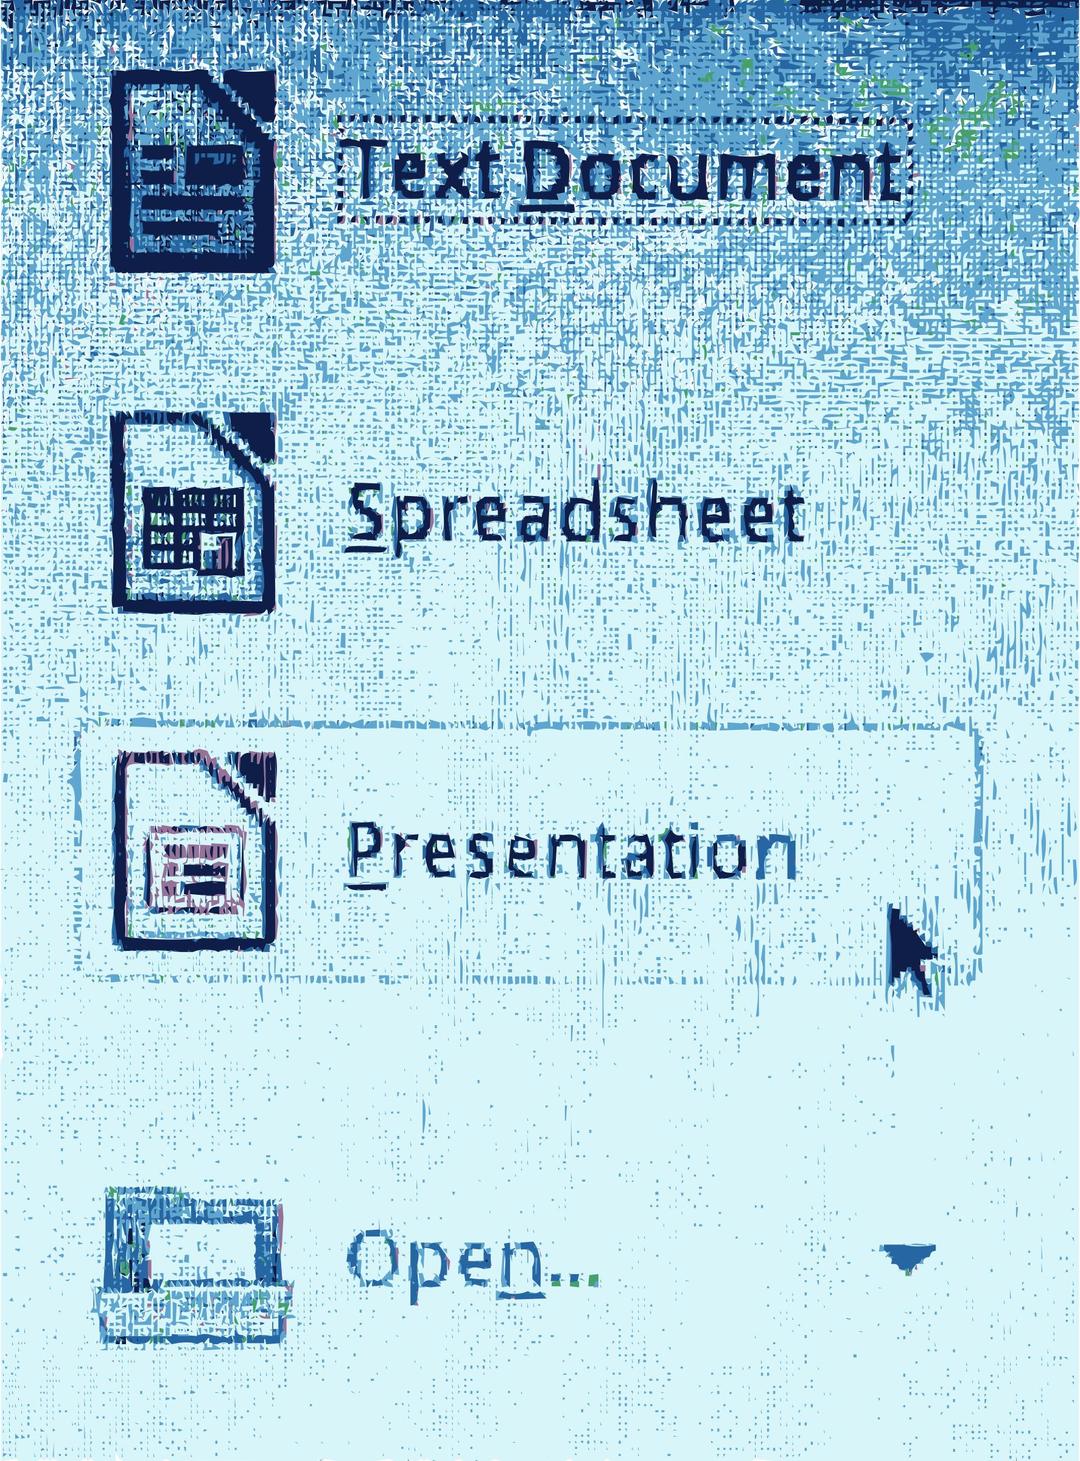 New libreoffice presentation template png transparent